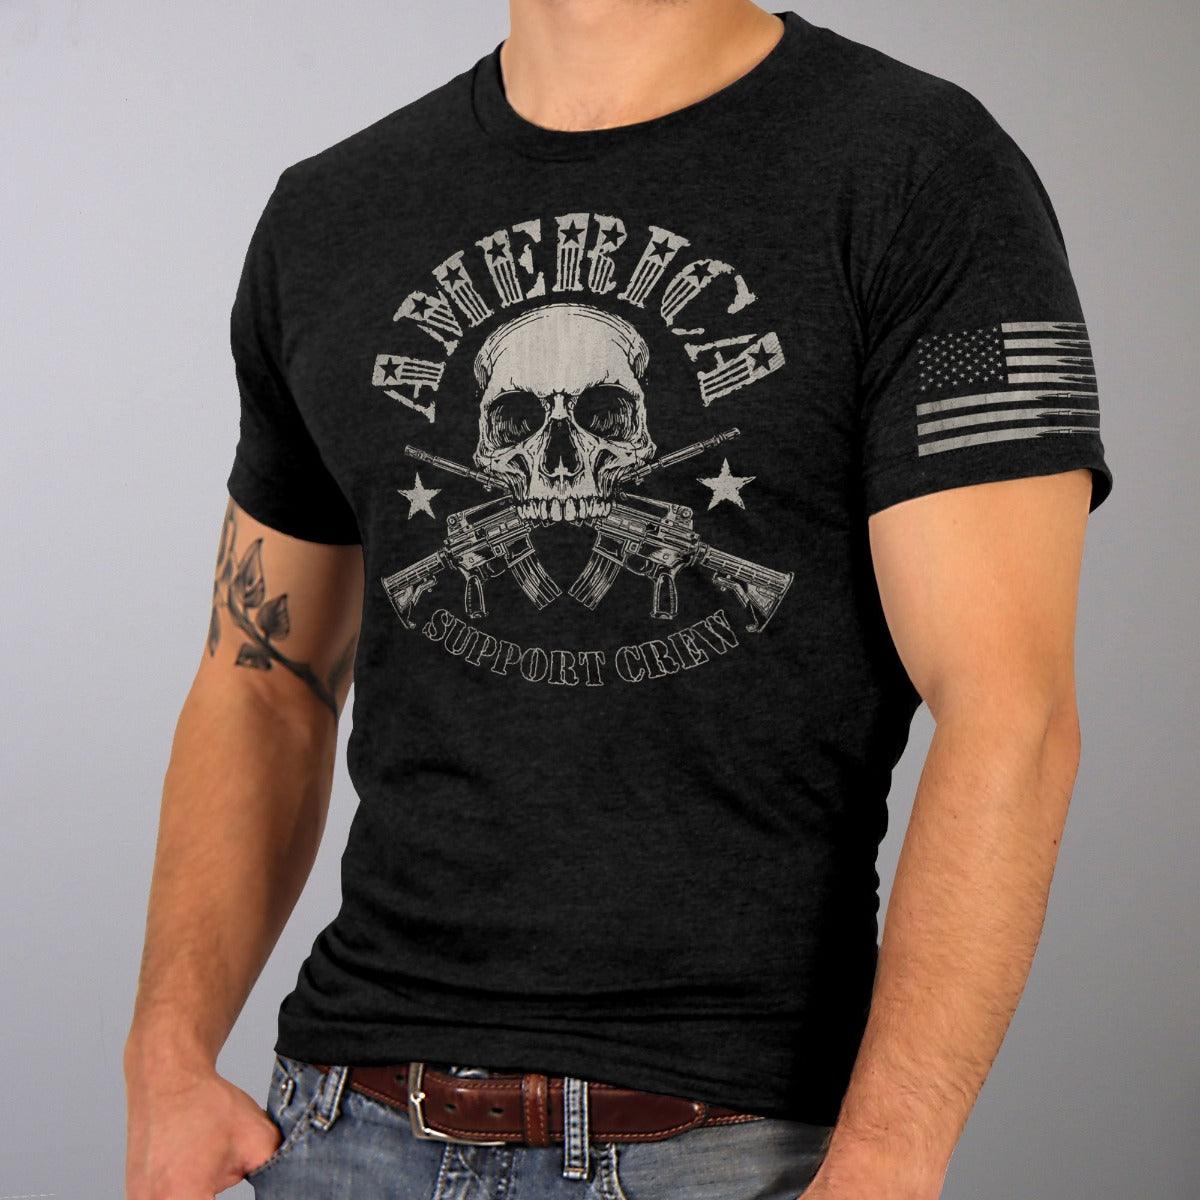 Hot Leathers Men's America Support Crew T-Shirt, Black - American Legend Rider